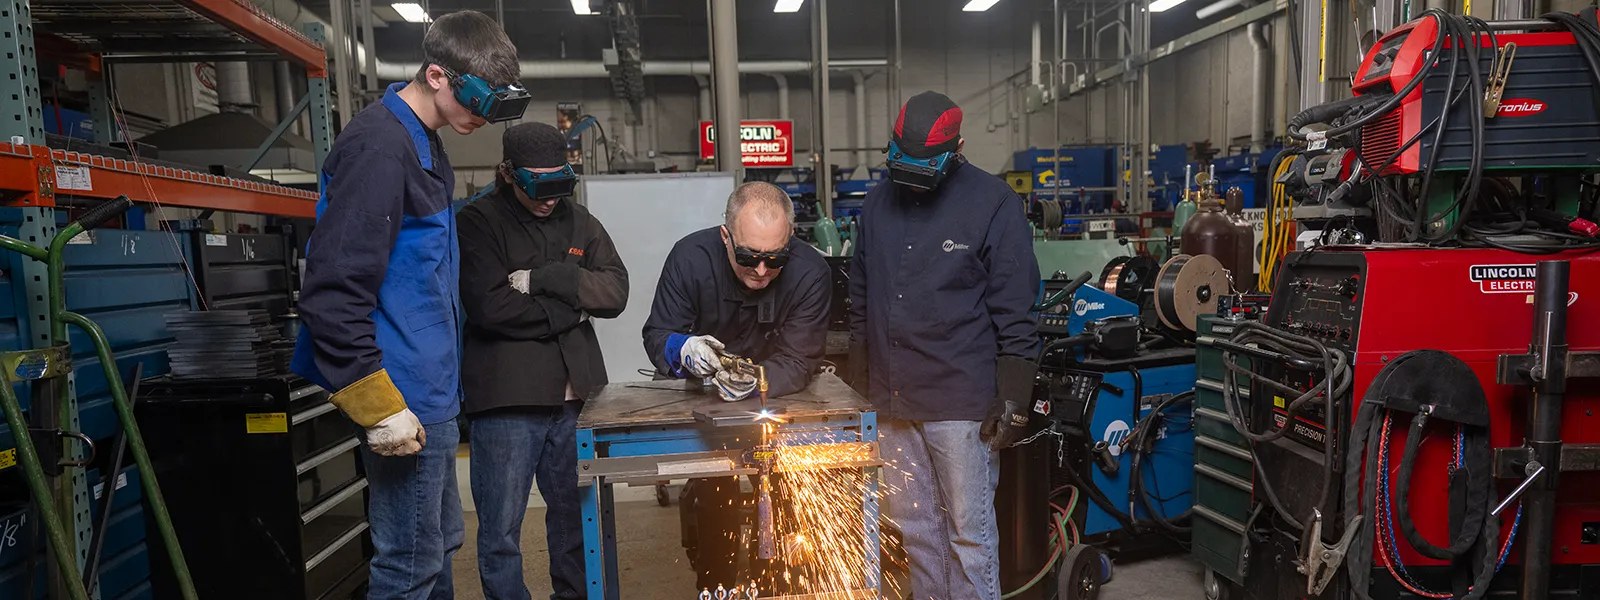 Students observe a professor welding material.